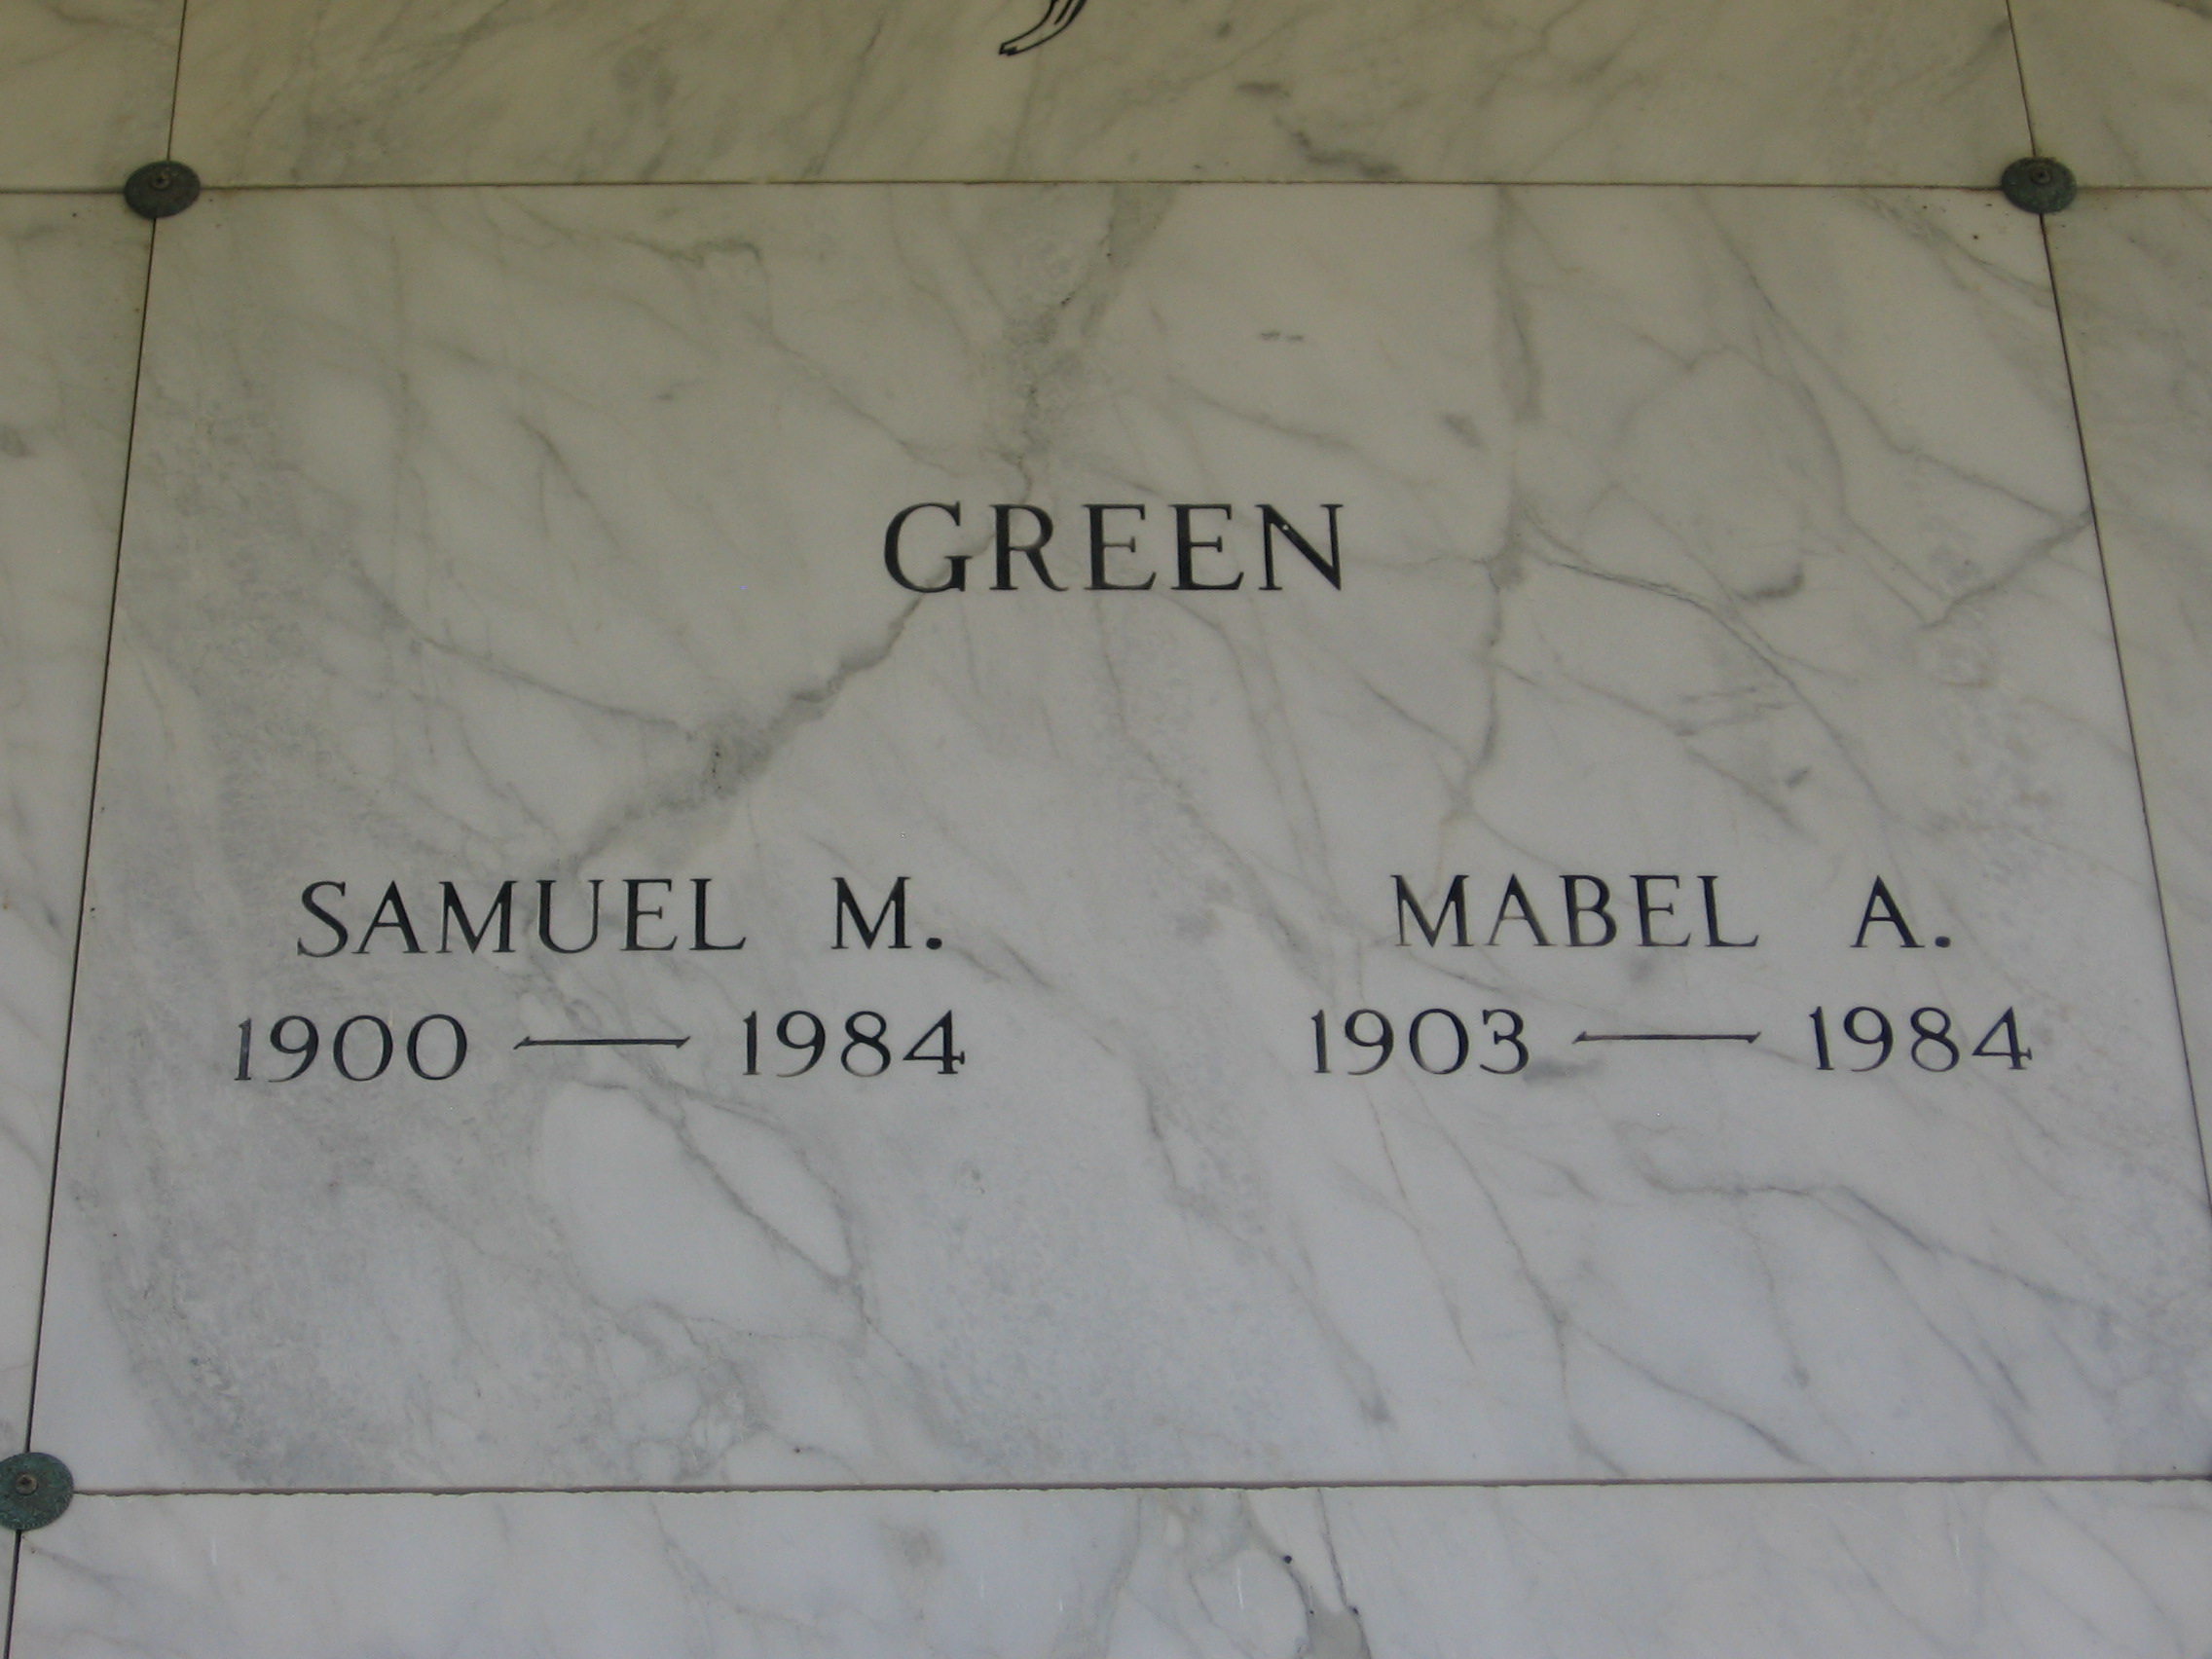 Samuel M Green